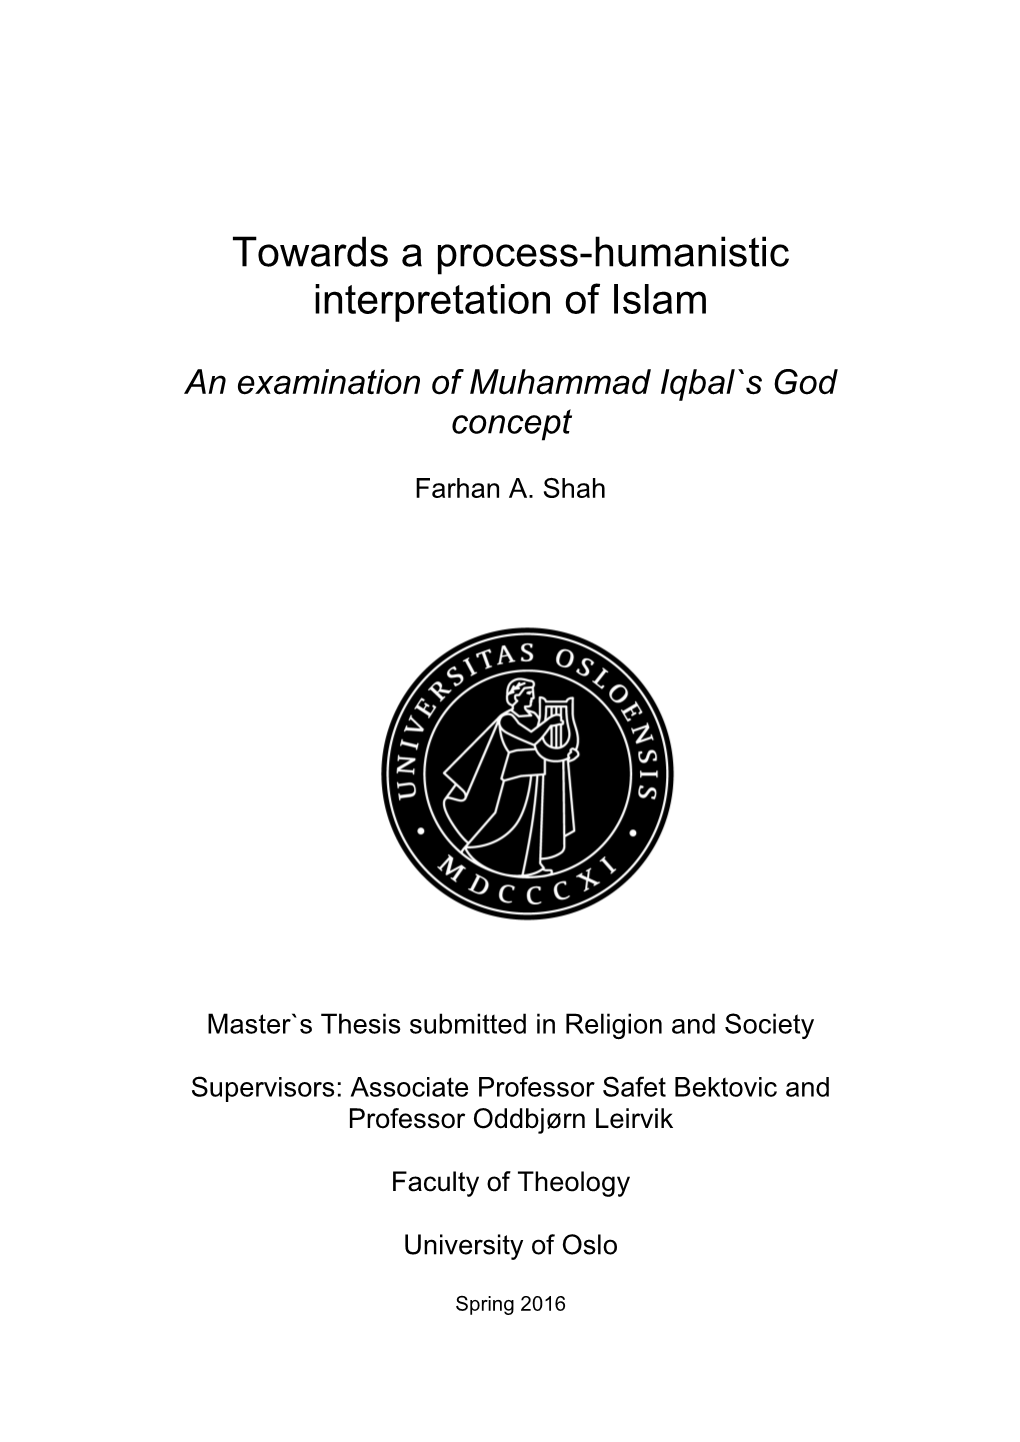 Towards a Process-Humanistic Interpretation of Islam